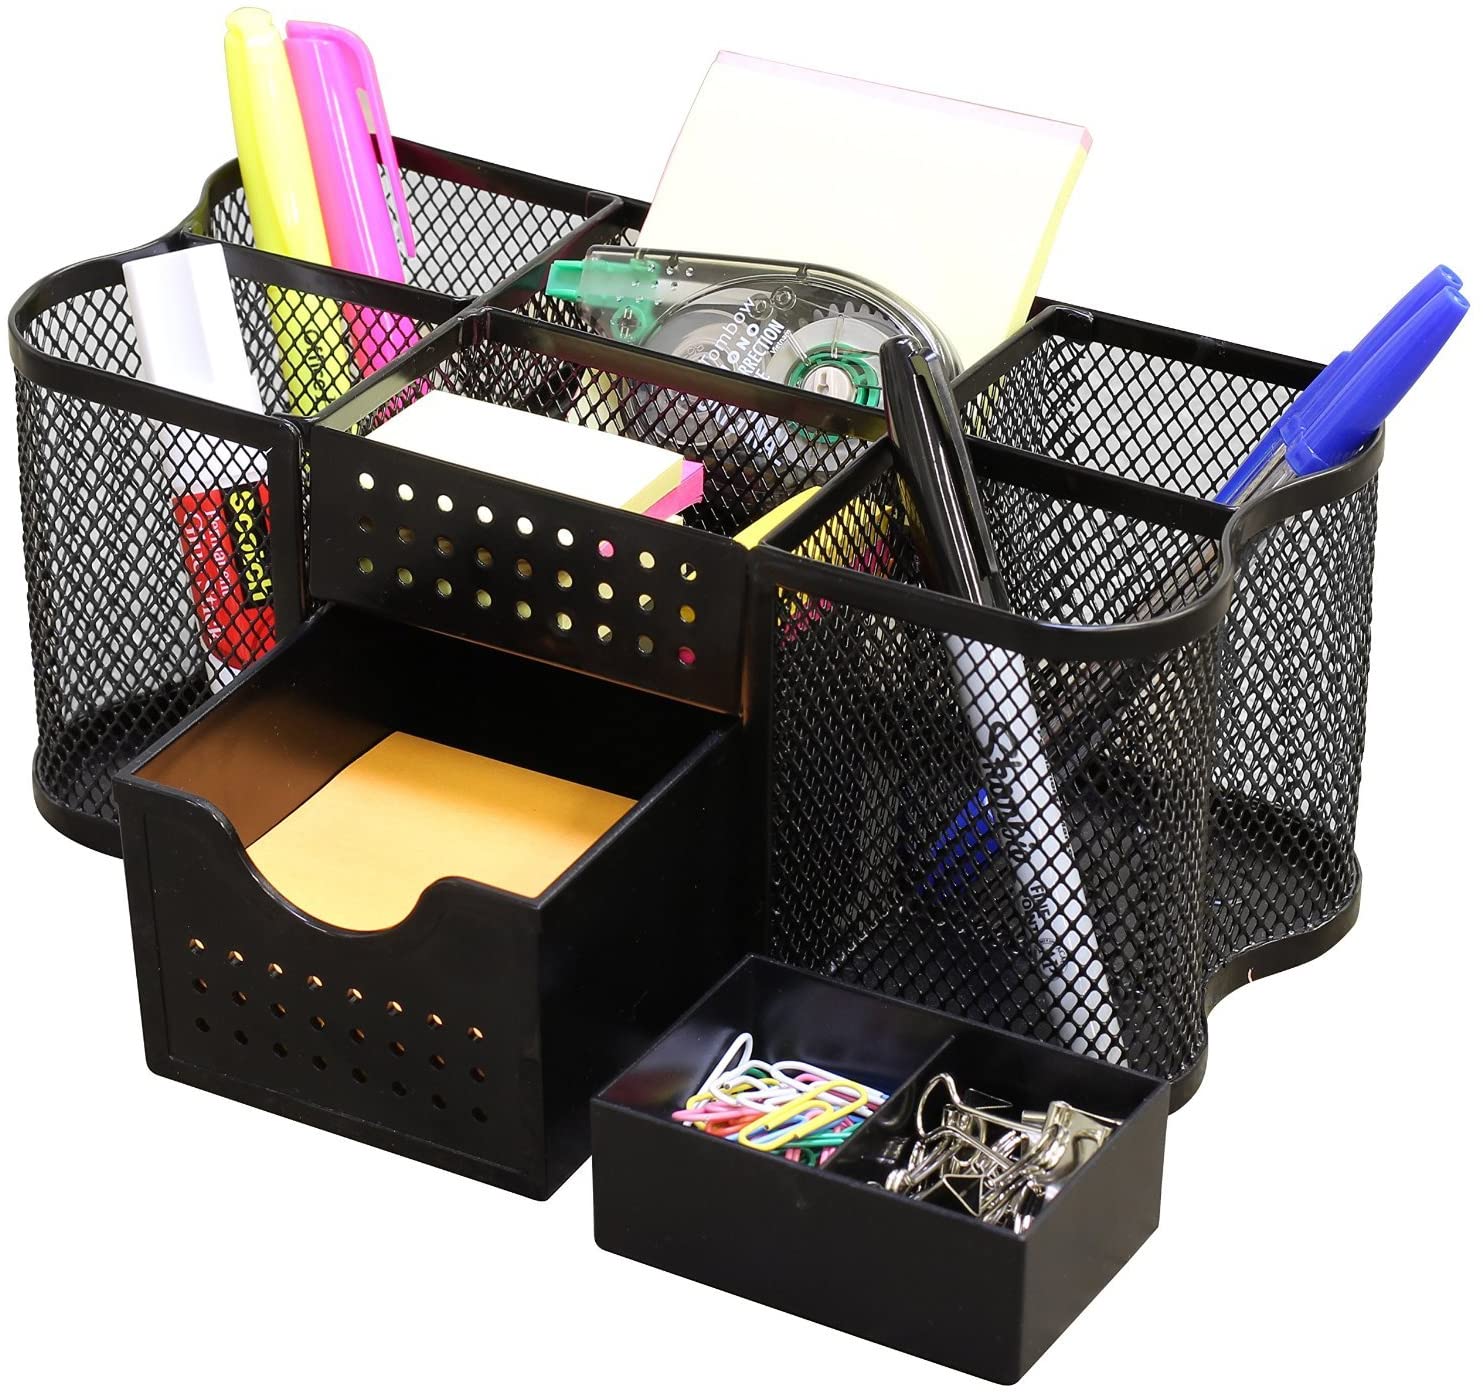 Greenco Mesh Desk Organizer Office Supplies Caddy, 6 Compartments - Black